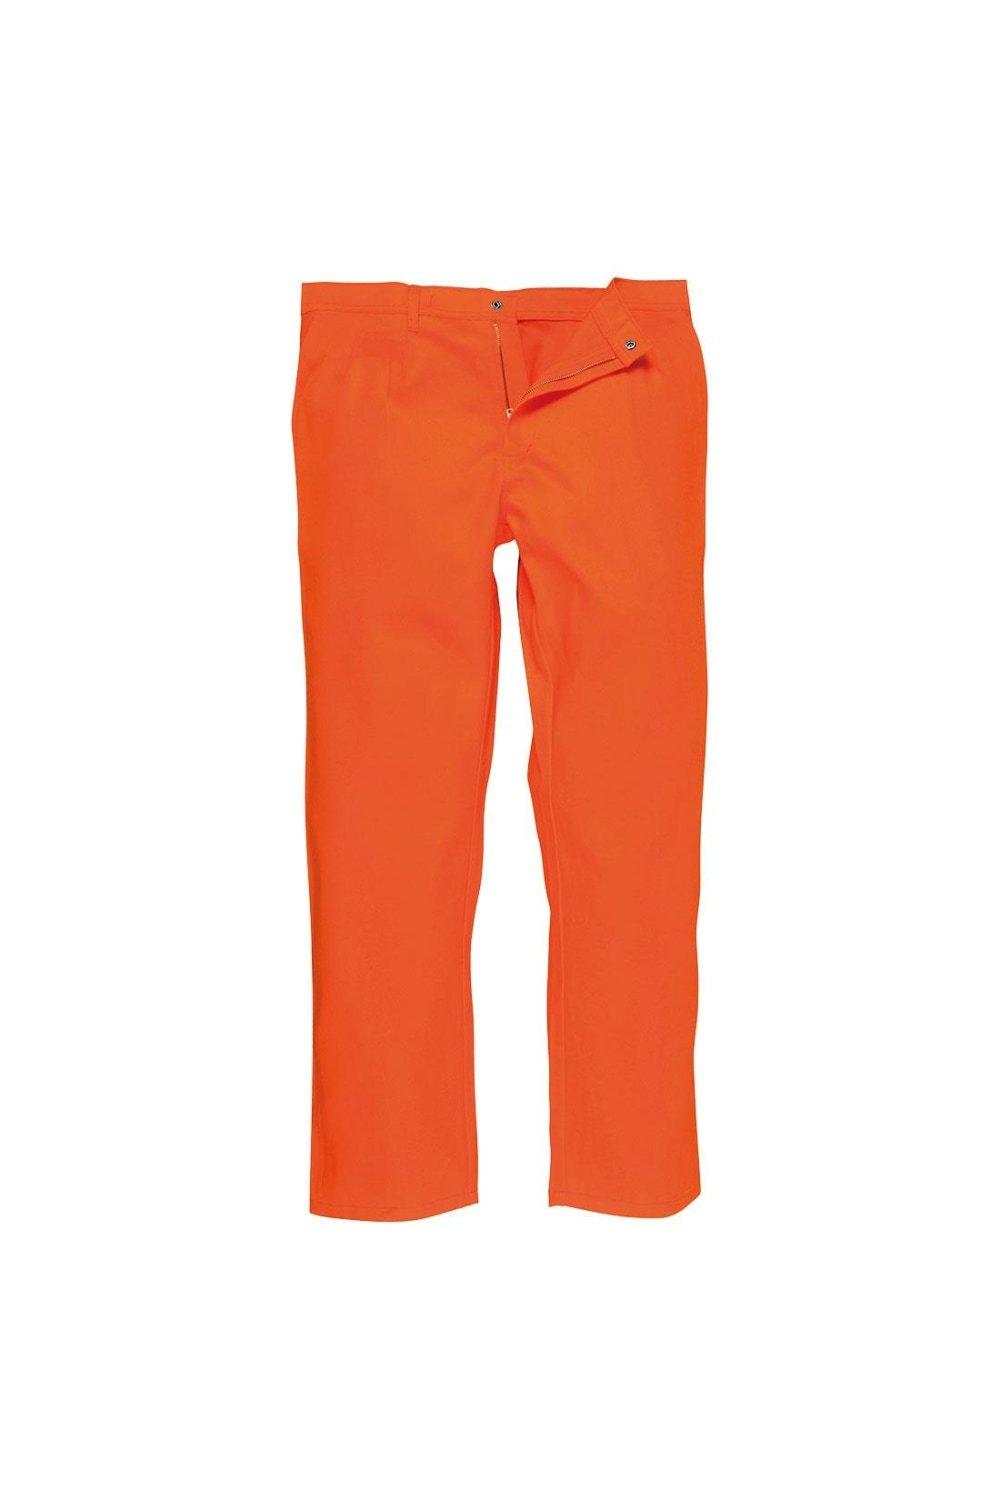 Рабочие брюки Bizweld Portwest, оранжевый yd 300 г м2 787x1092x0 330 мм 100 л